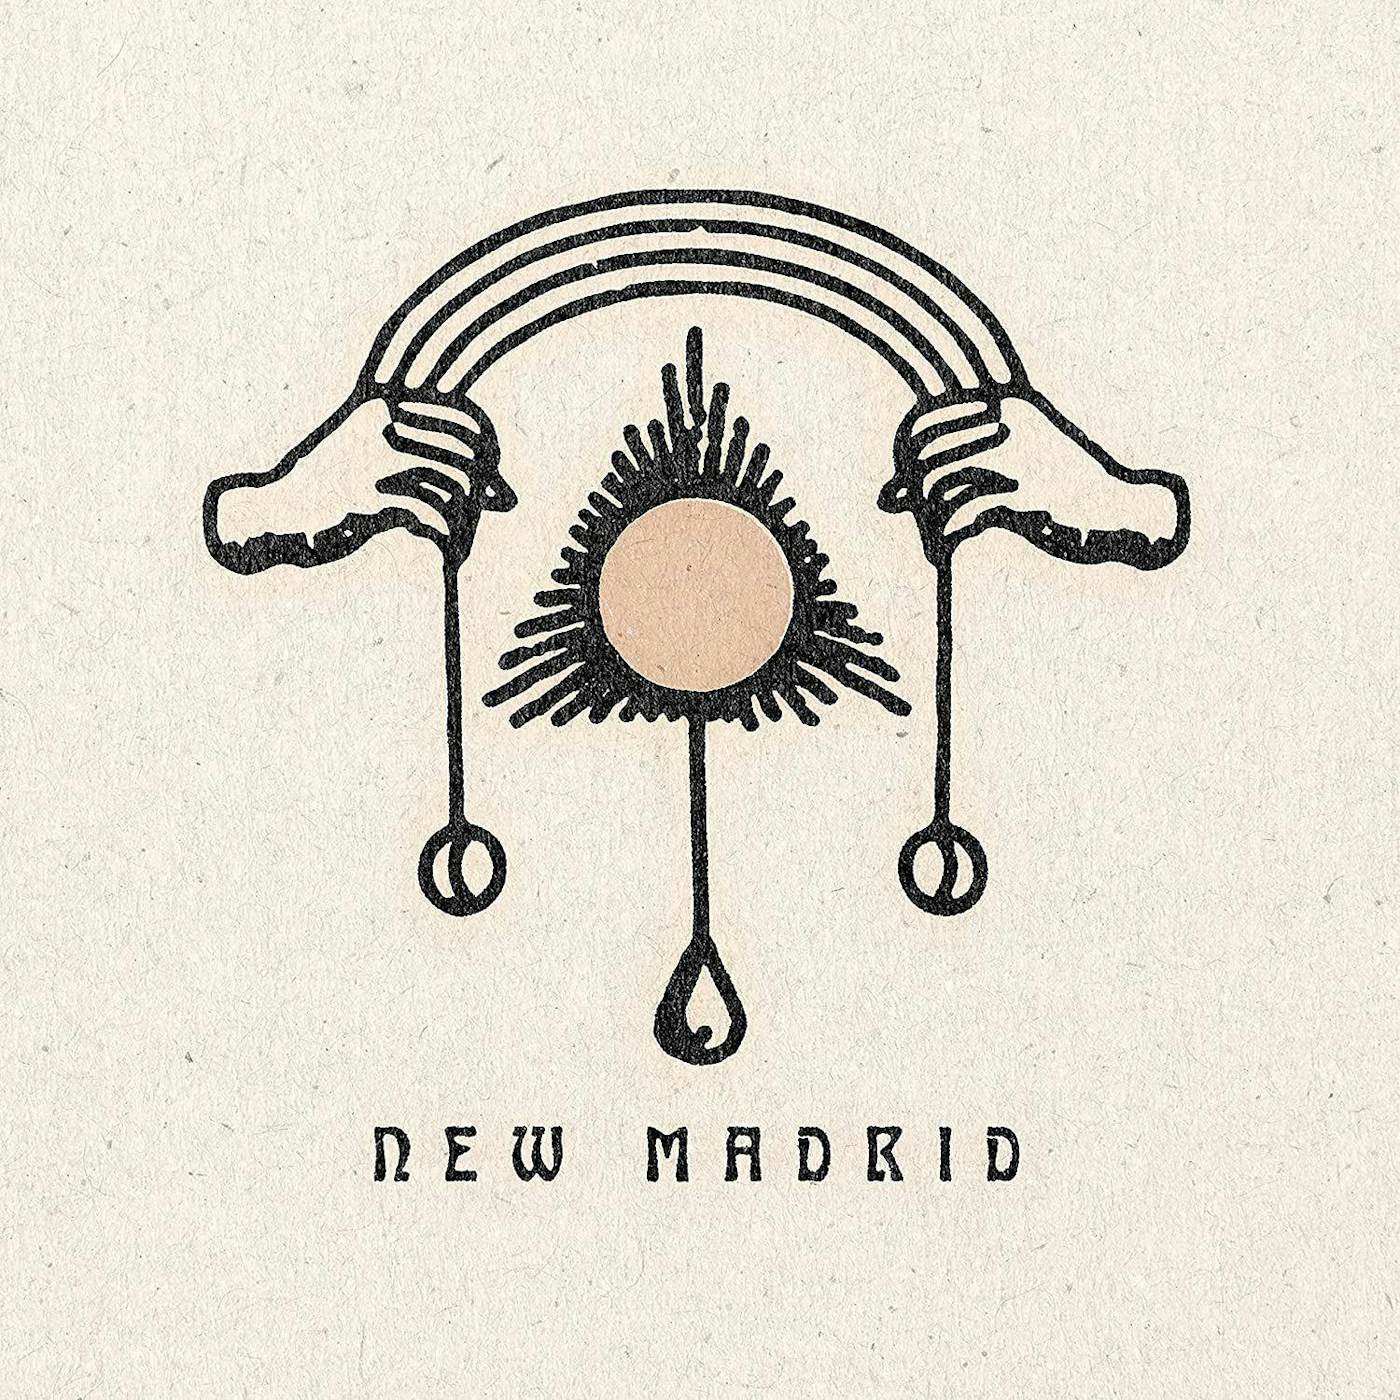 NEW MADRID (WHITE) Vinyl Record